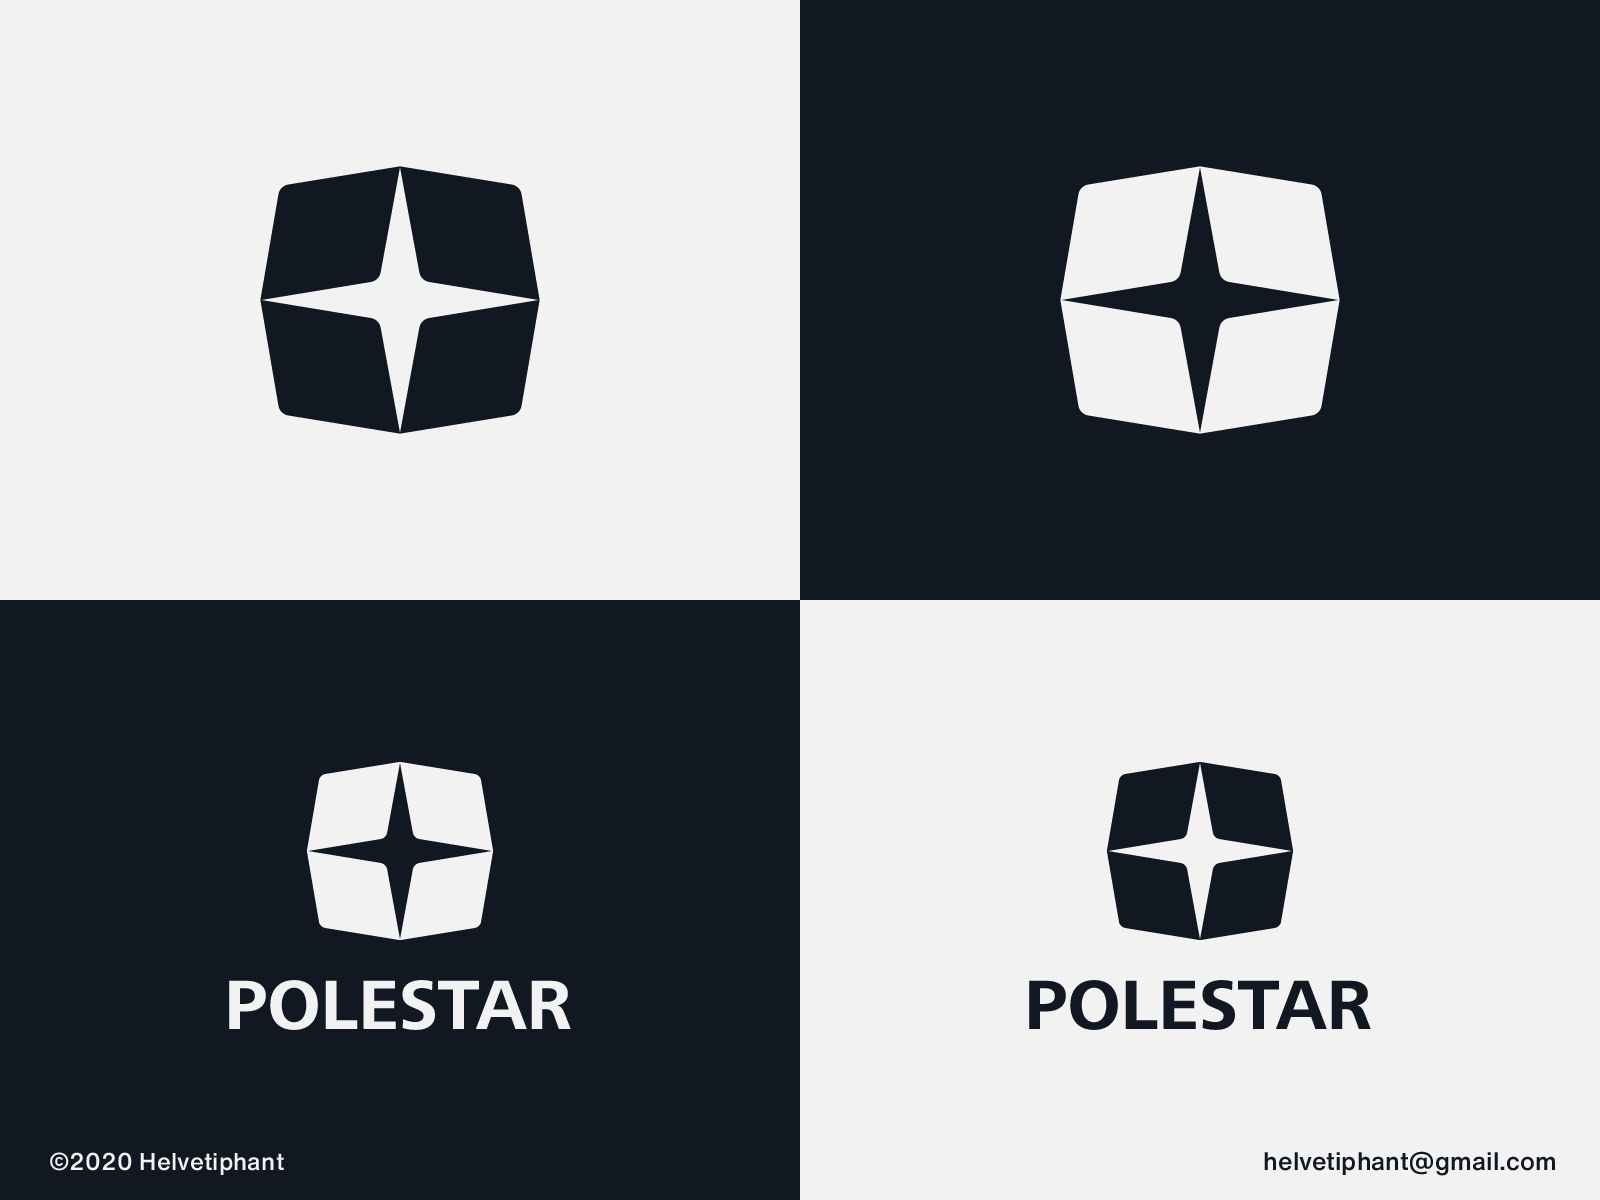 Polestar logo concept by Helvetiphant™ on Dribbble